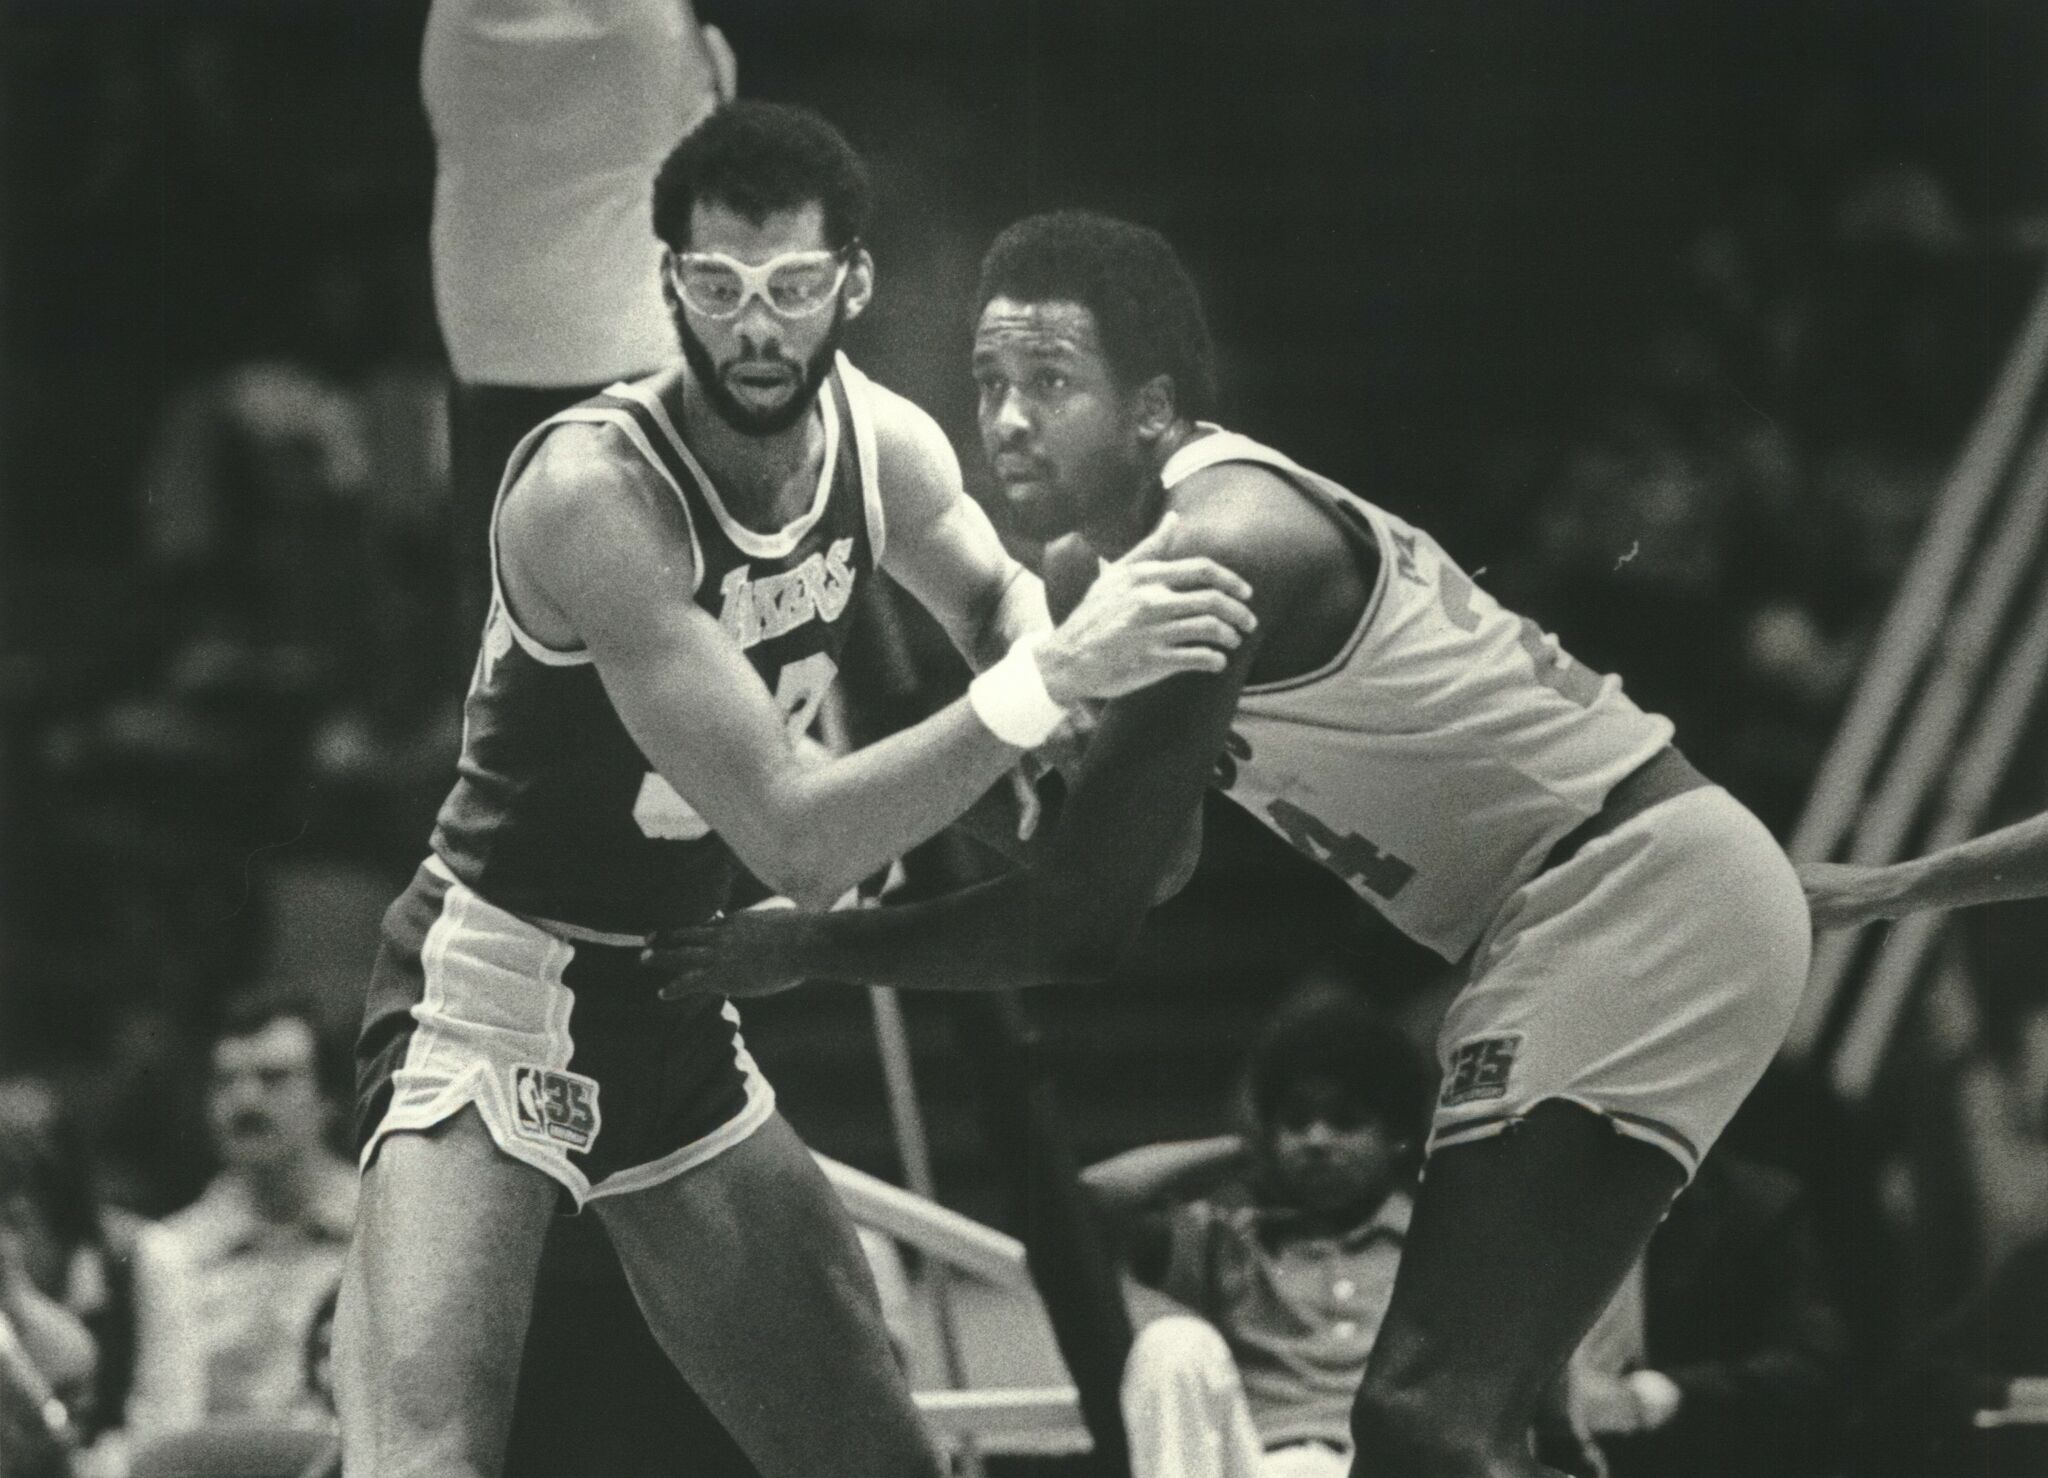 Vintage 1980s Houston Rockets NBA Champion Basketball Shorts 